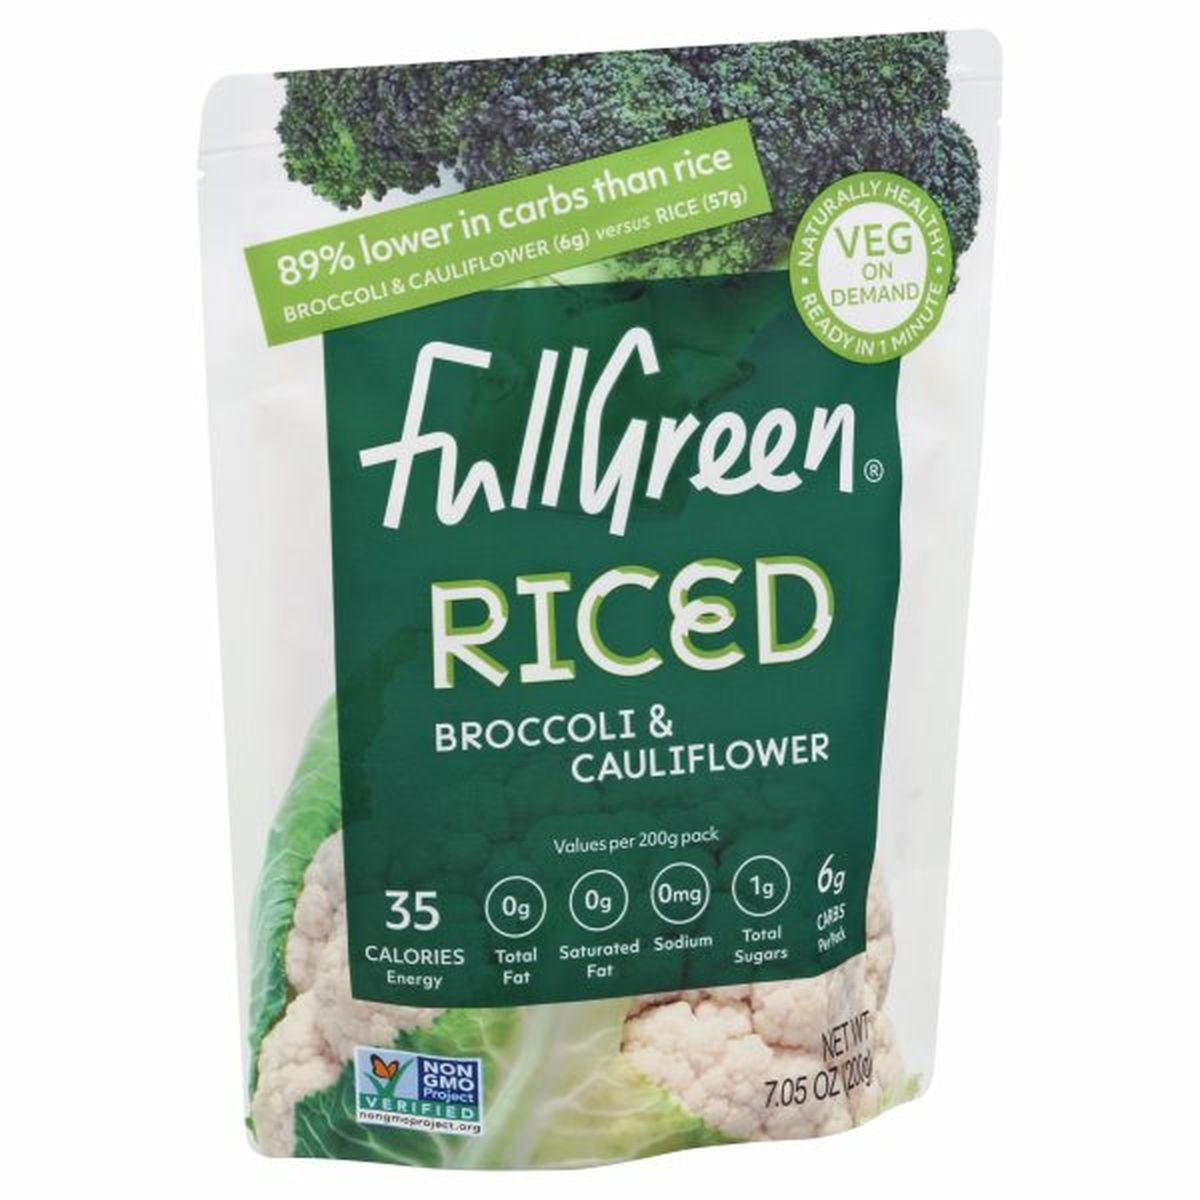 Calories in Vegi Rice Broccoli & Cauliflower, Riced